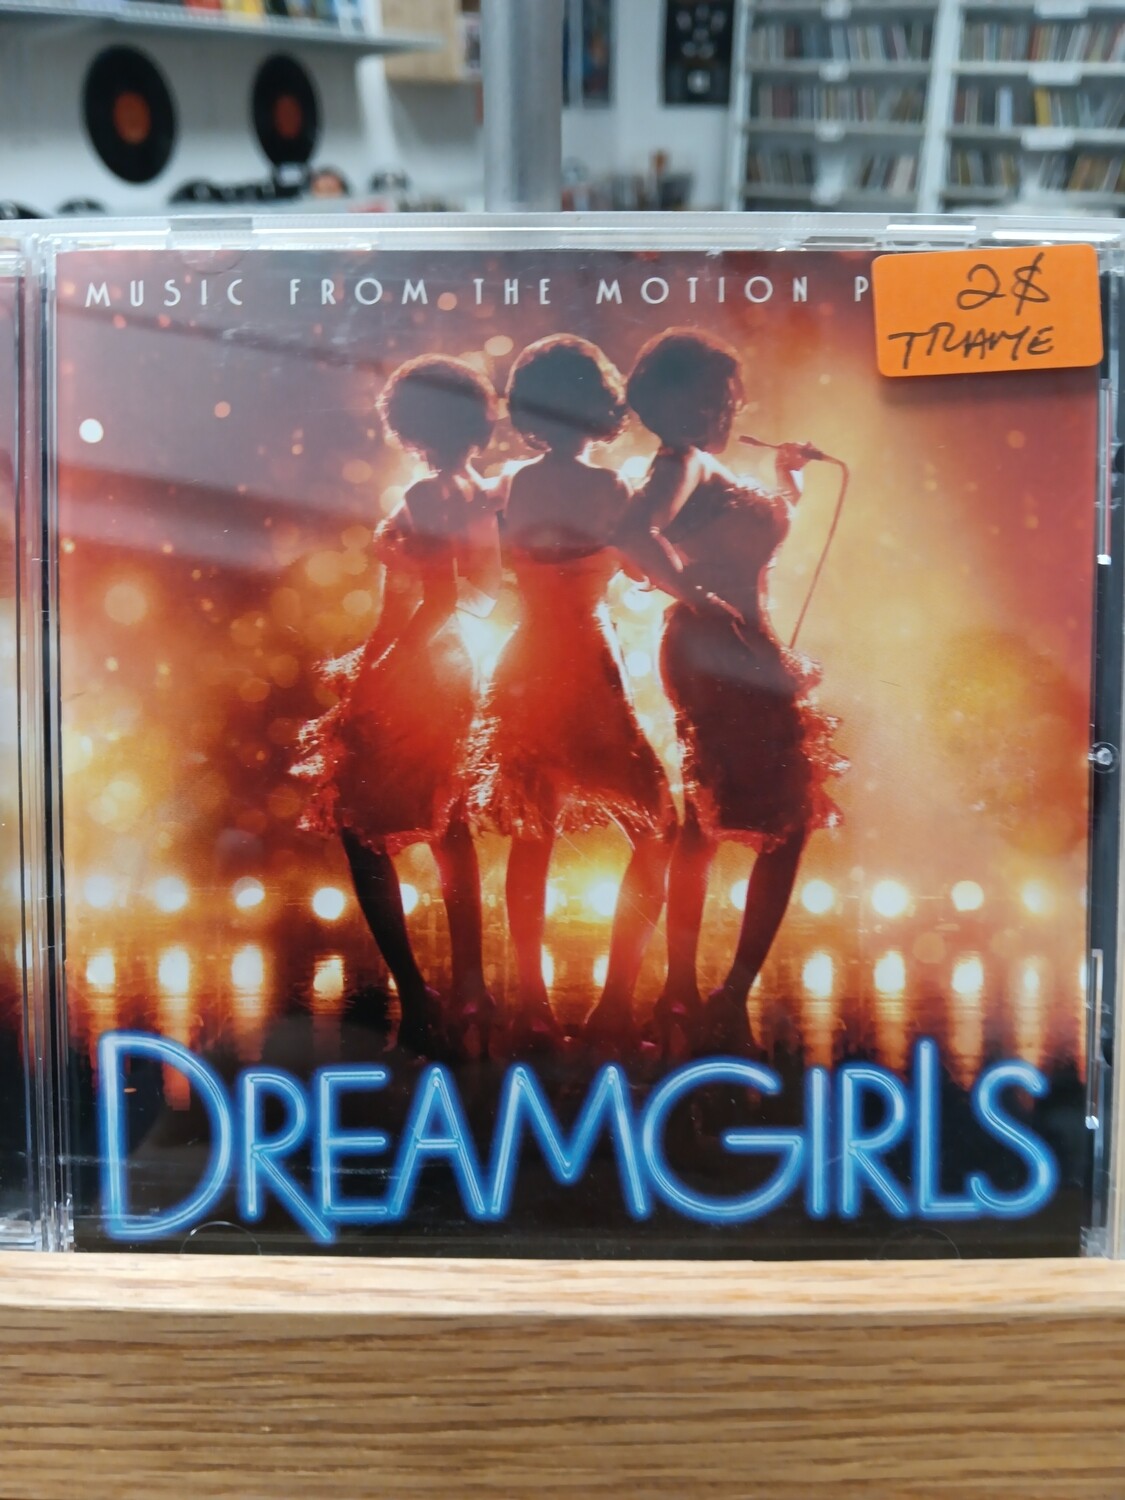 VARIOUS - Dreamgirls (CD)